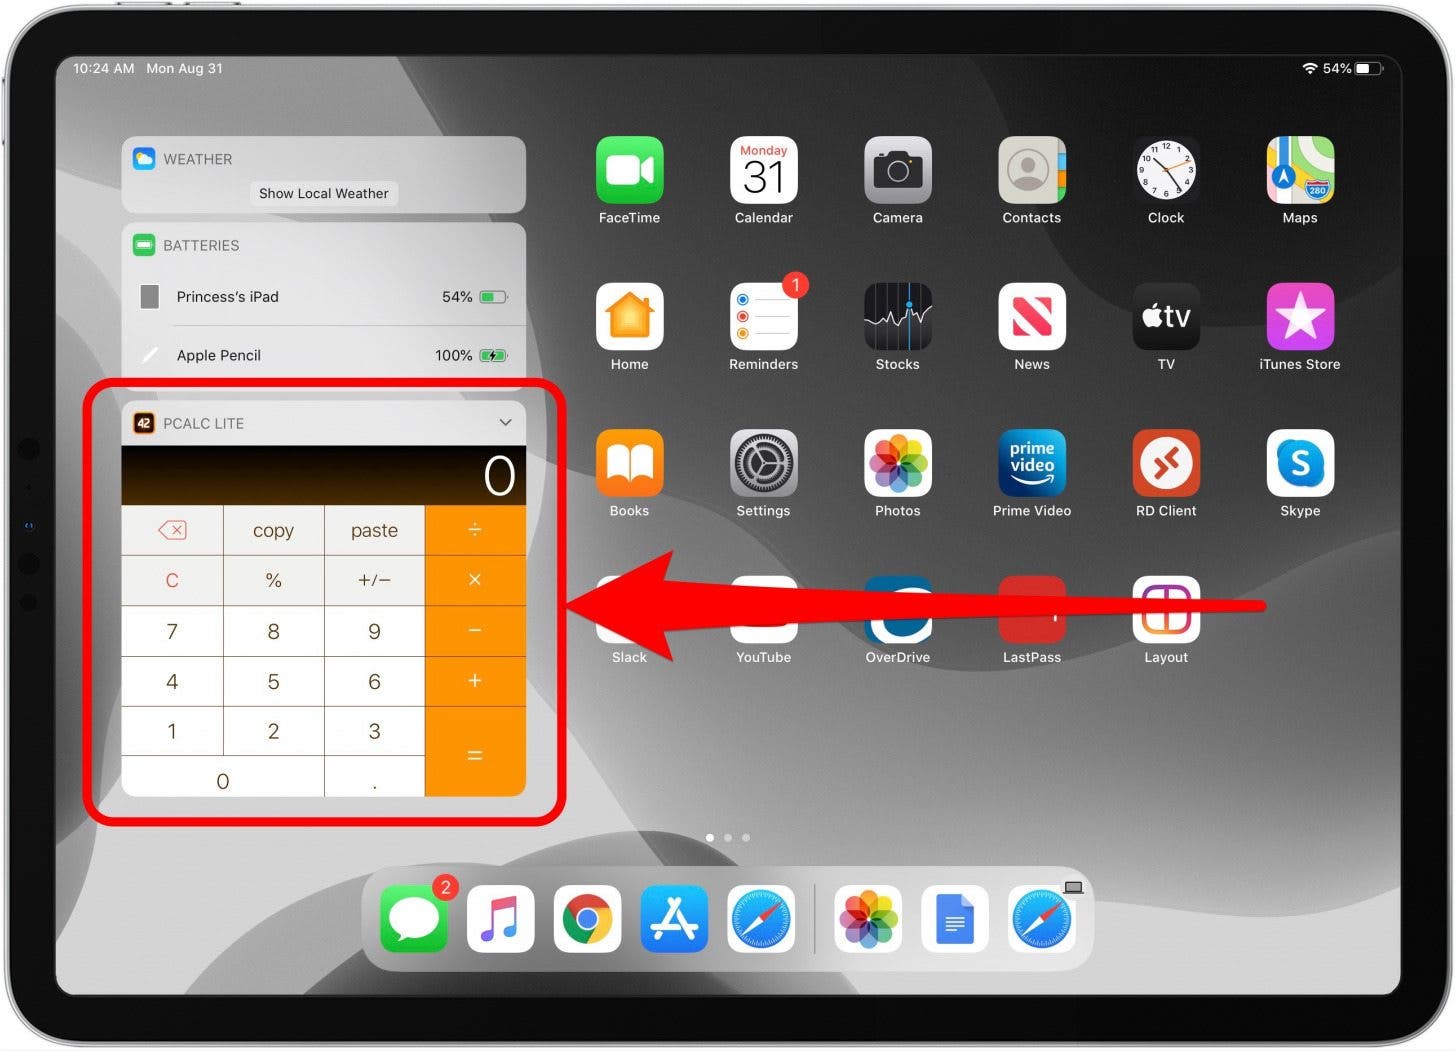 Calculadora de iPad: Widget de calculadora PCalc visible en la vista Hoy del iPad